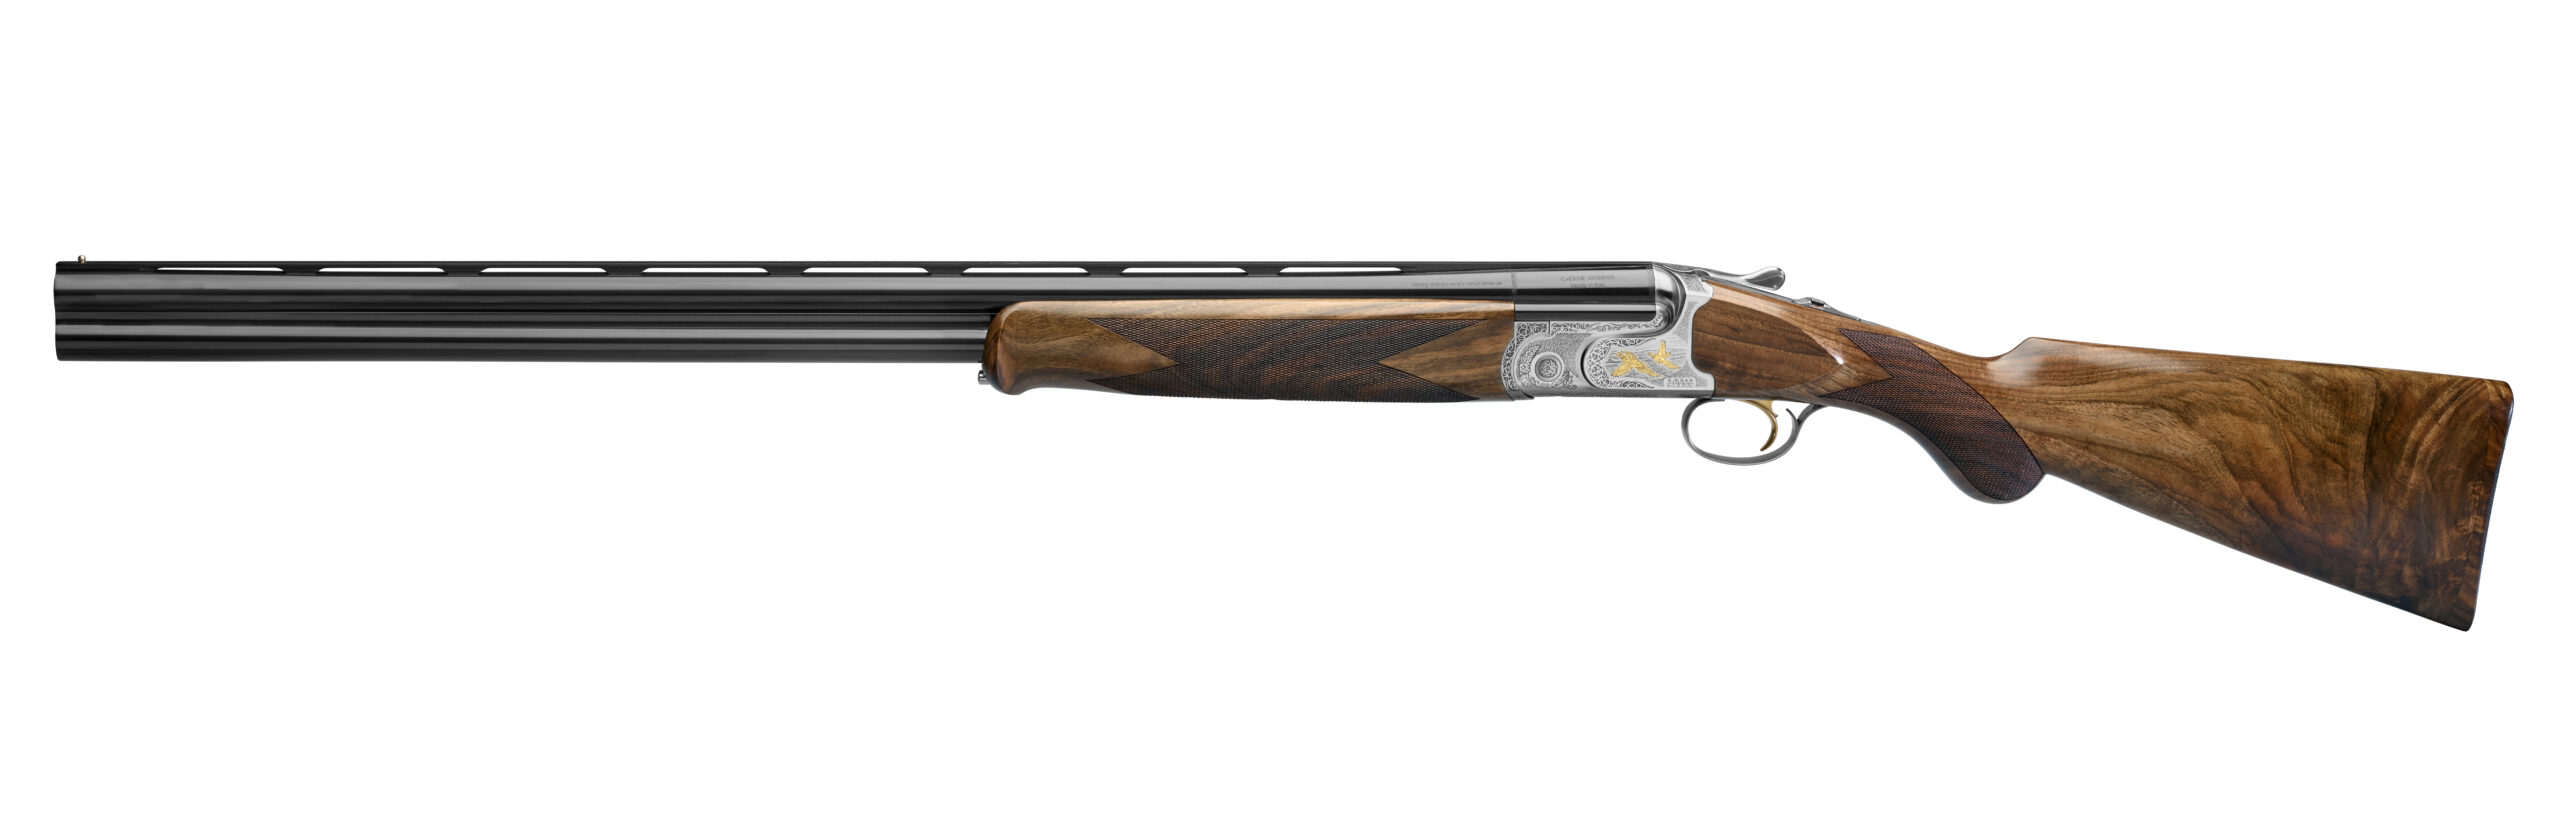 double barrel over/under shotgun with wood stock and metallic receiver